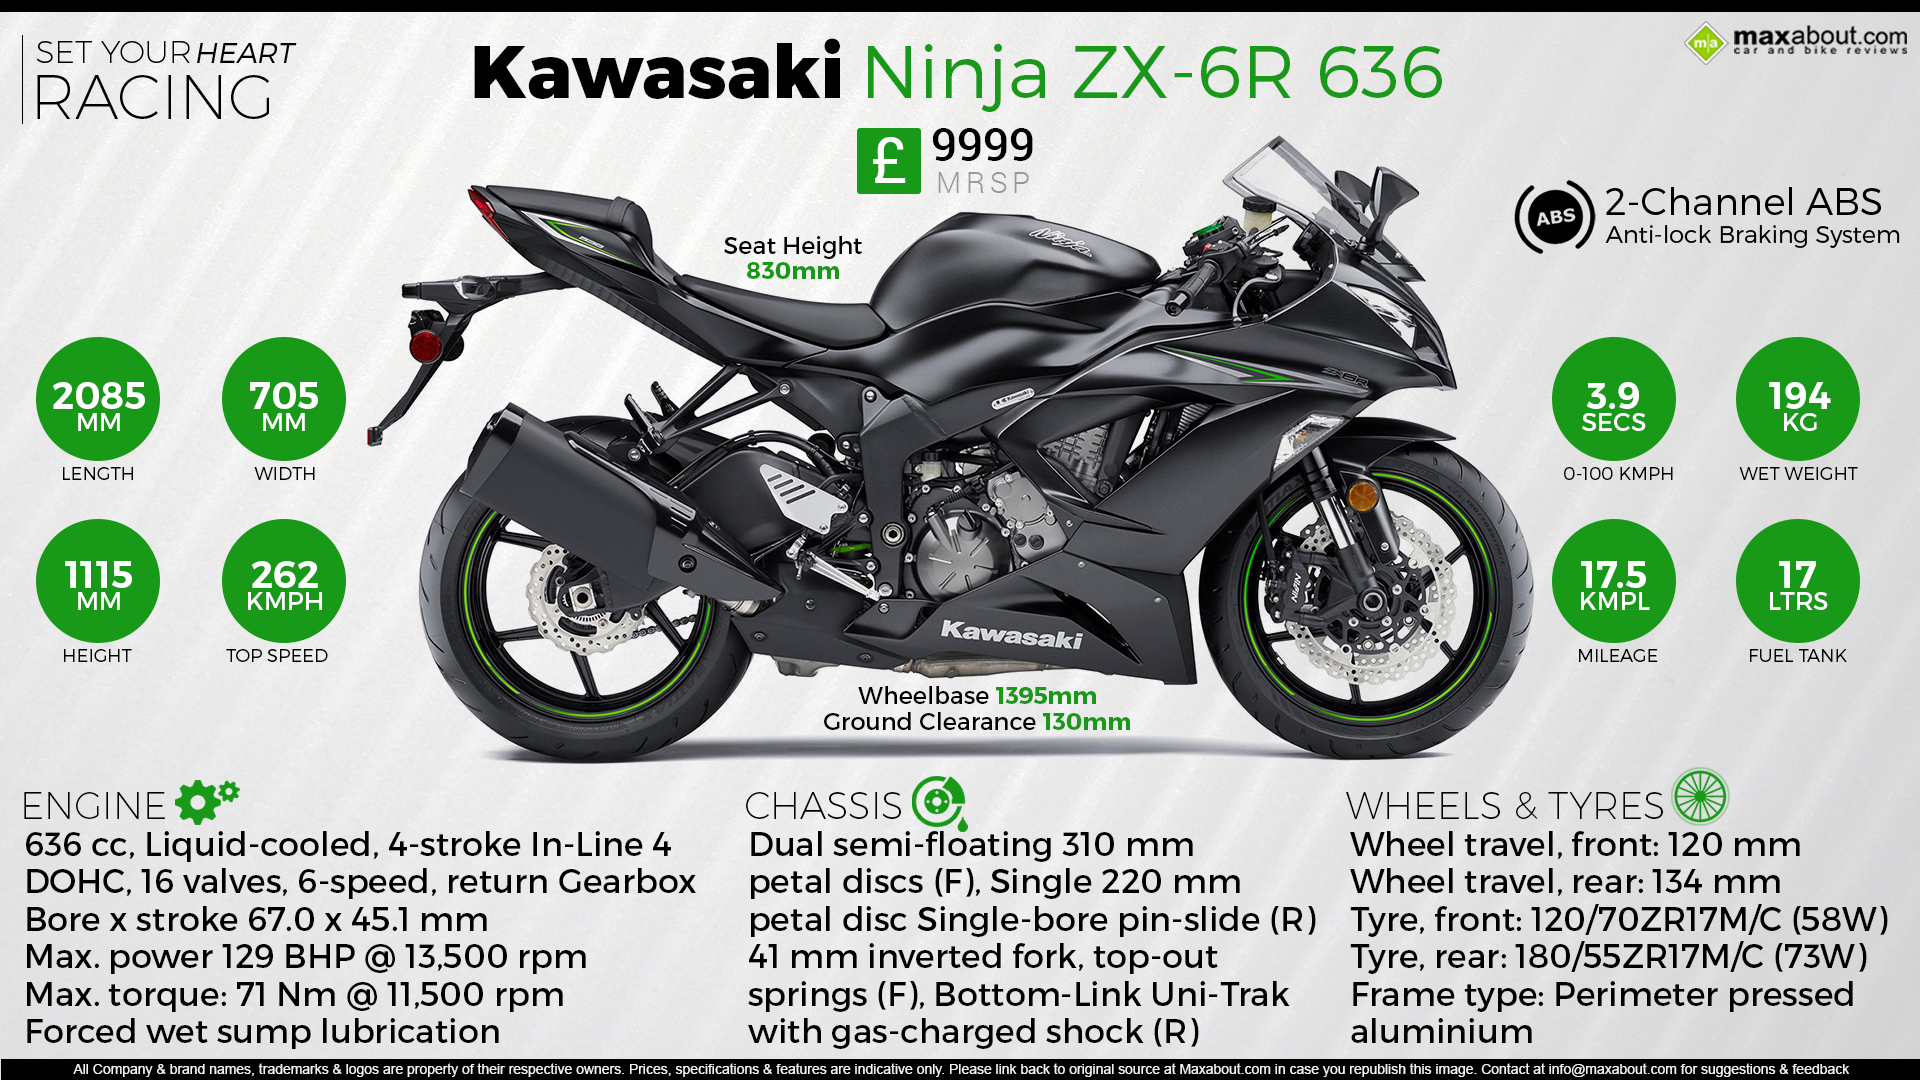 2016 Kawasaki Ninja 636 - Set Your Heart